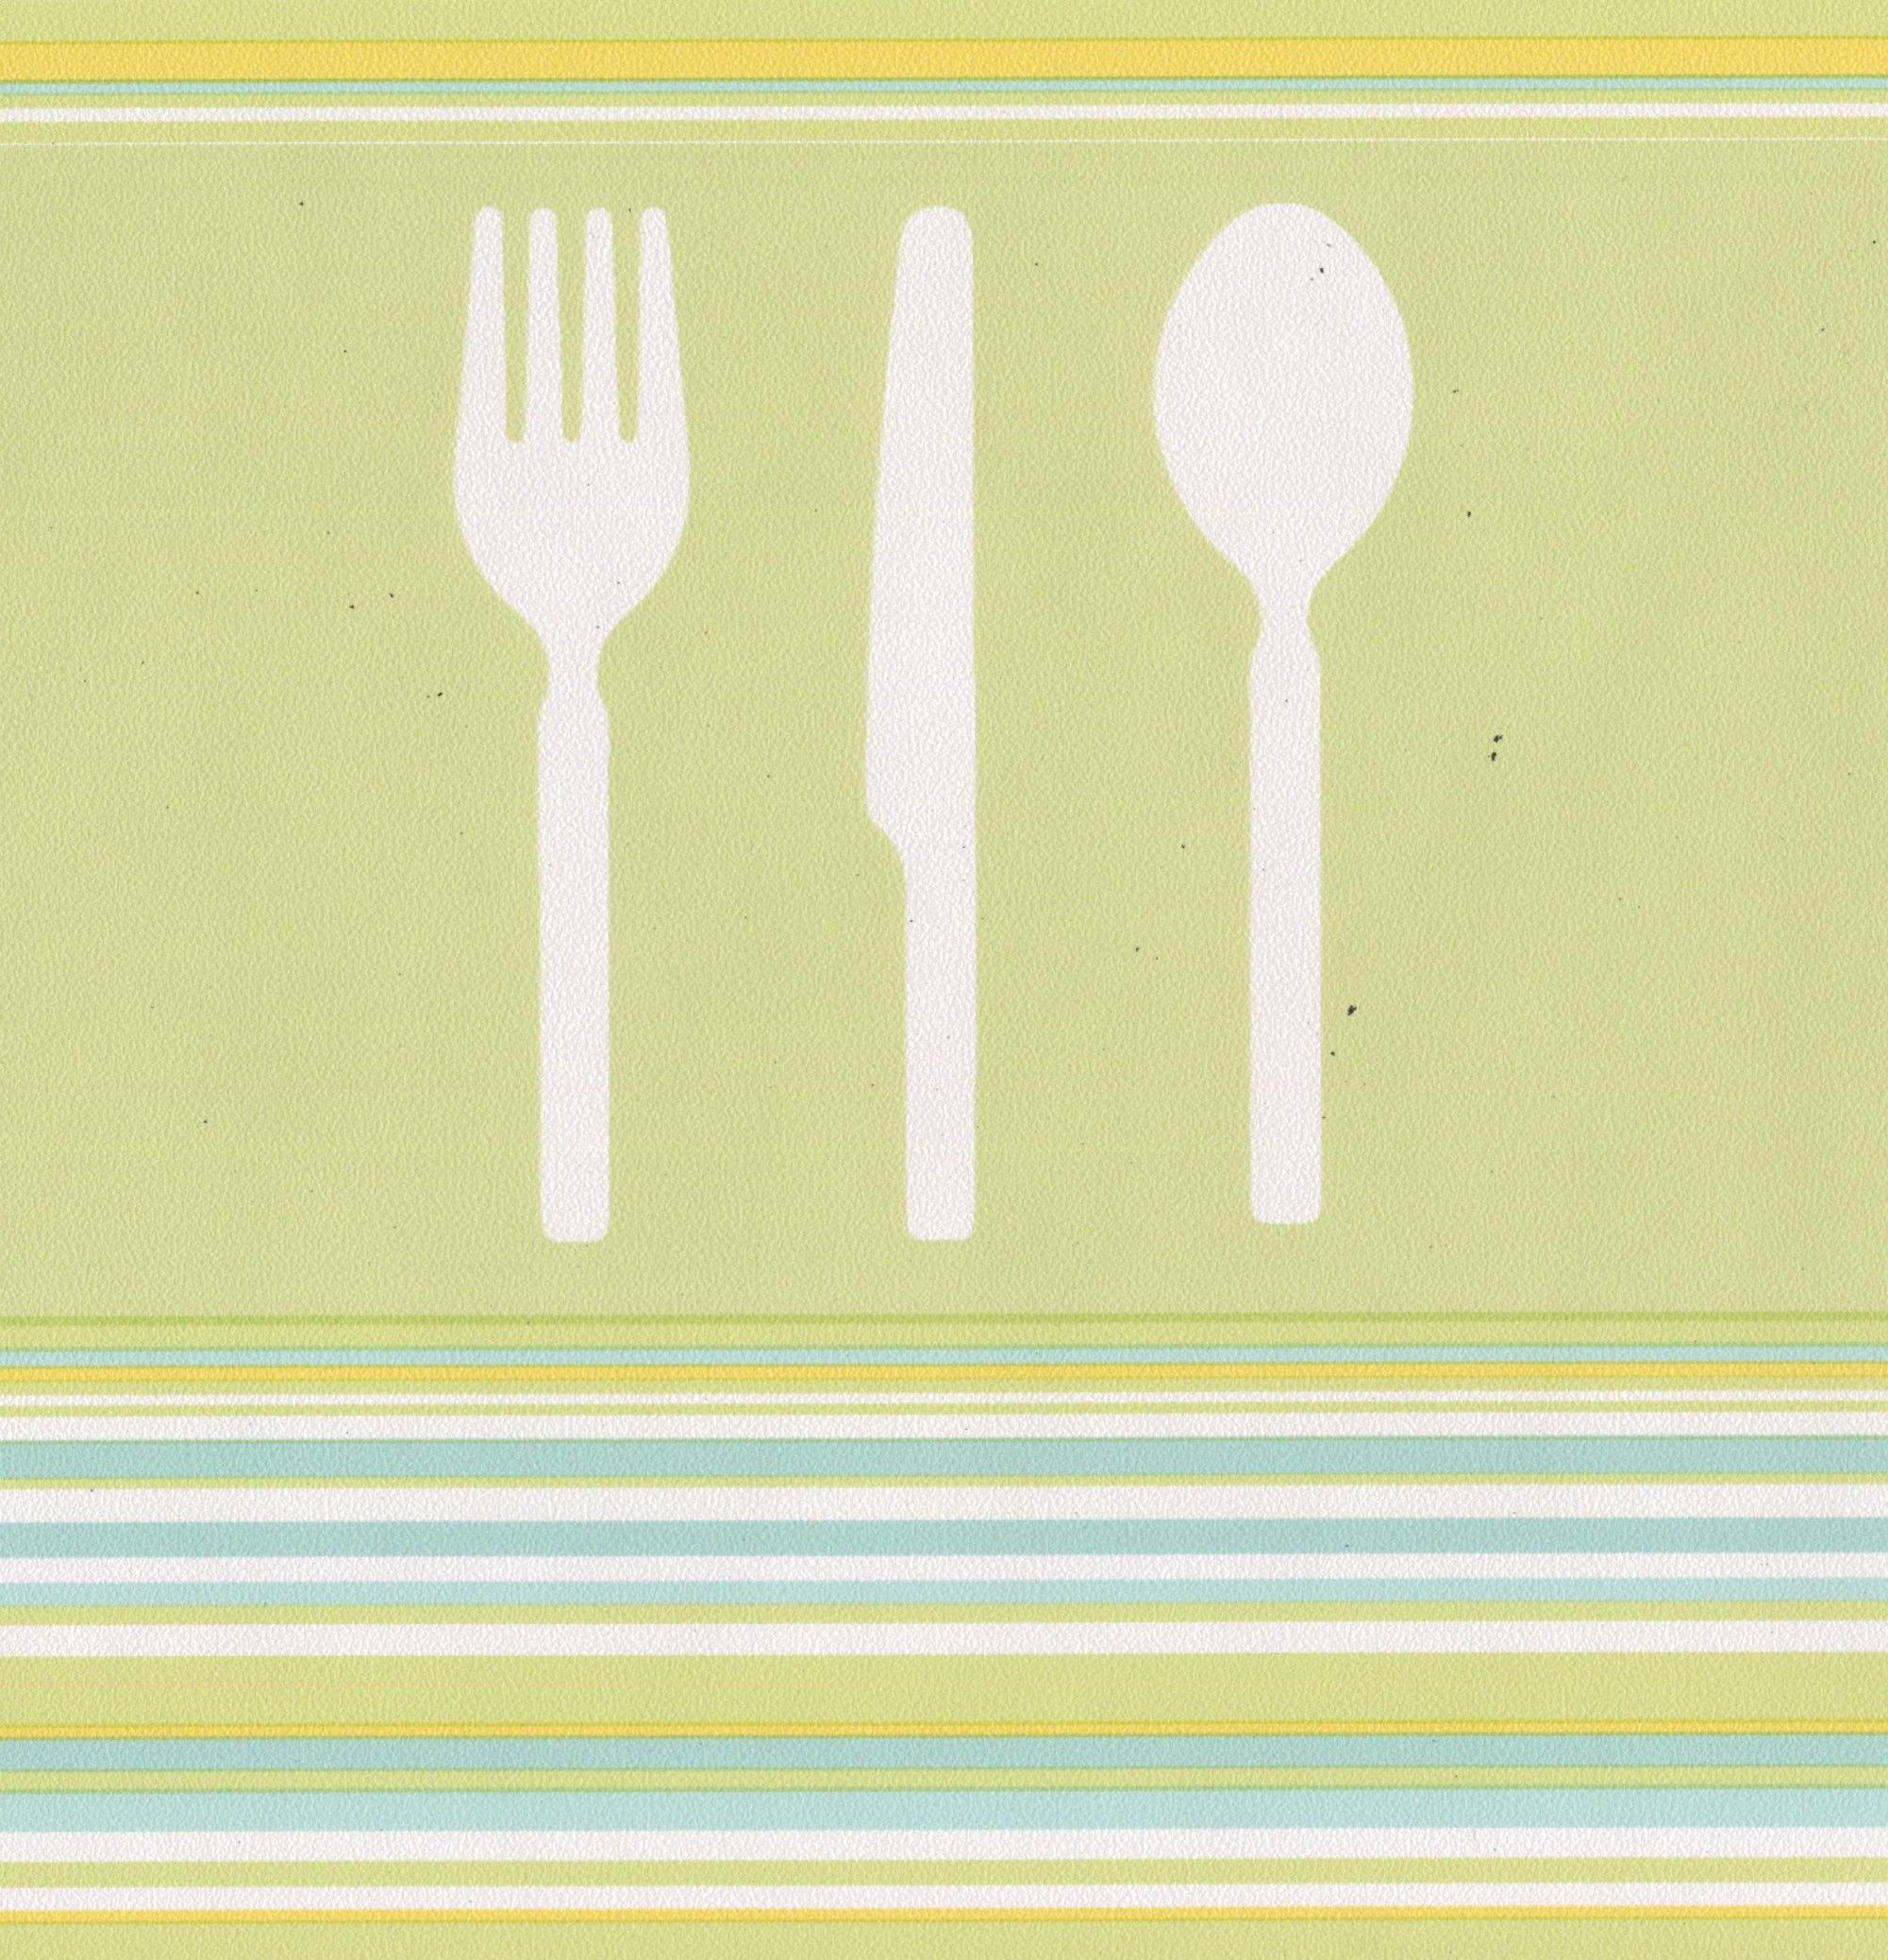 White Fork Knife Spoon Olive Green Kitchen Wallpaper Border Retro Design, Roll 15' x 7''